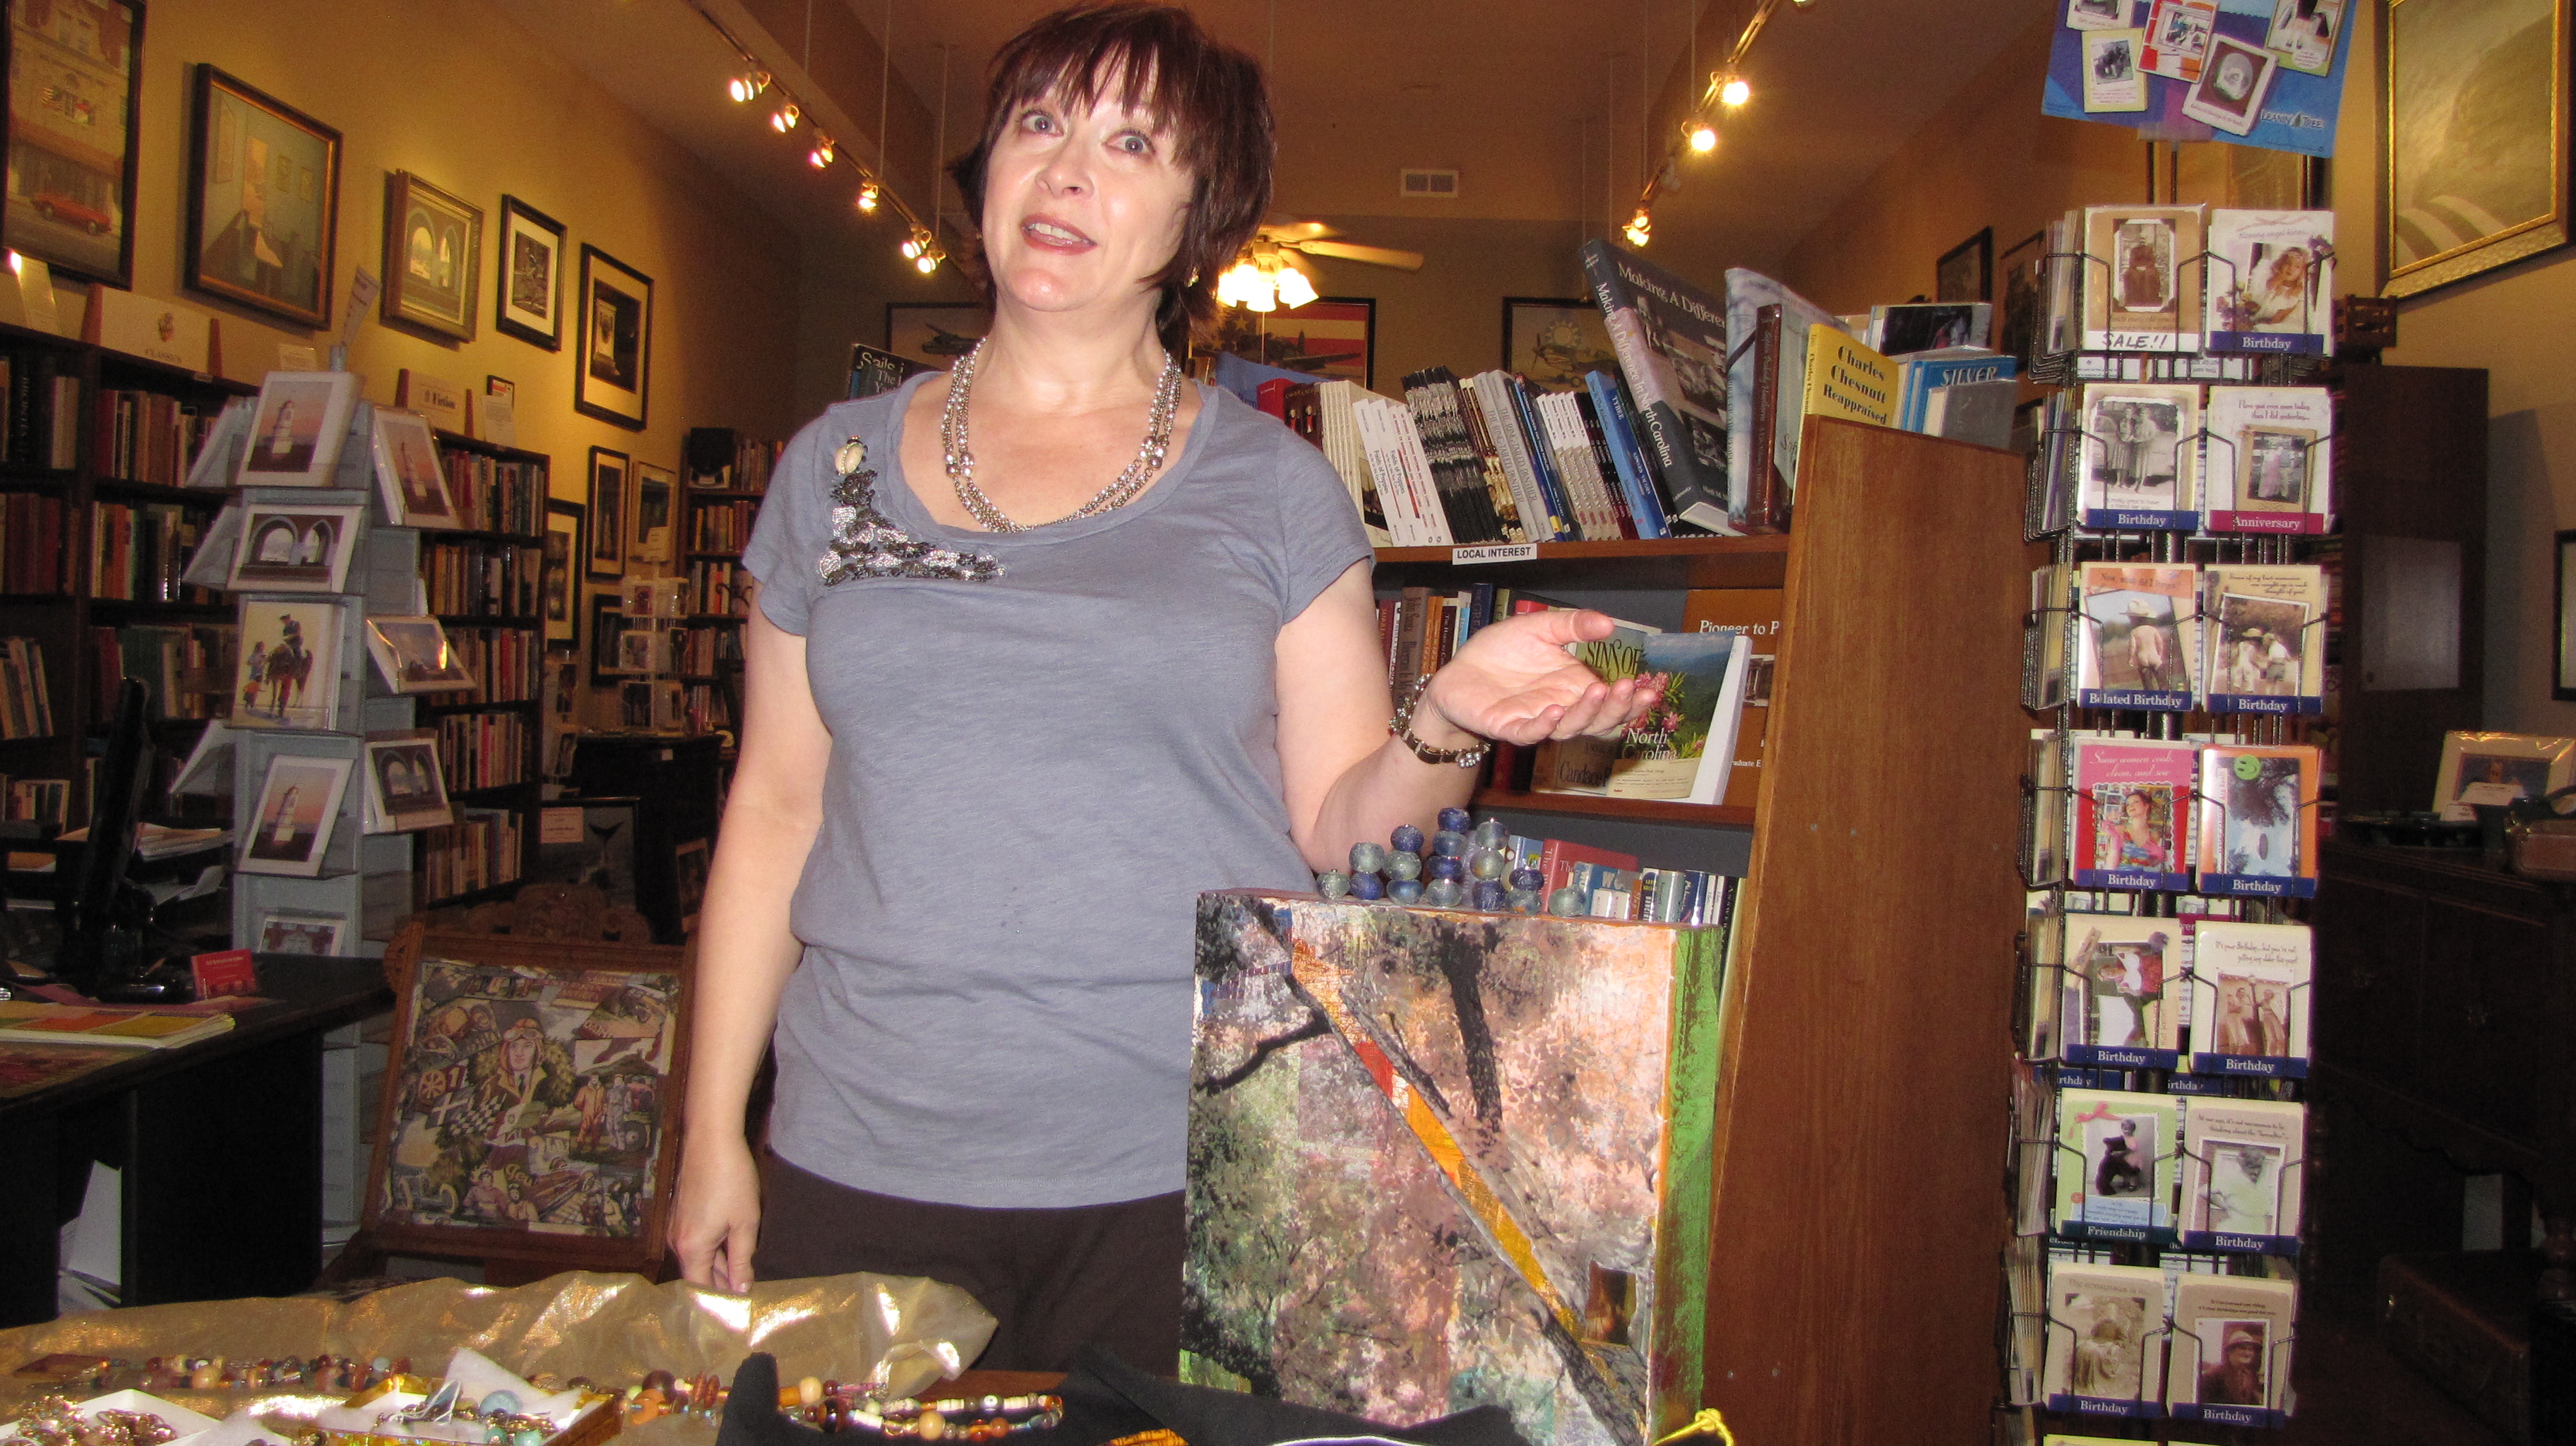 Susie Godwin describes her artwork inside City Center Gallery and Books.